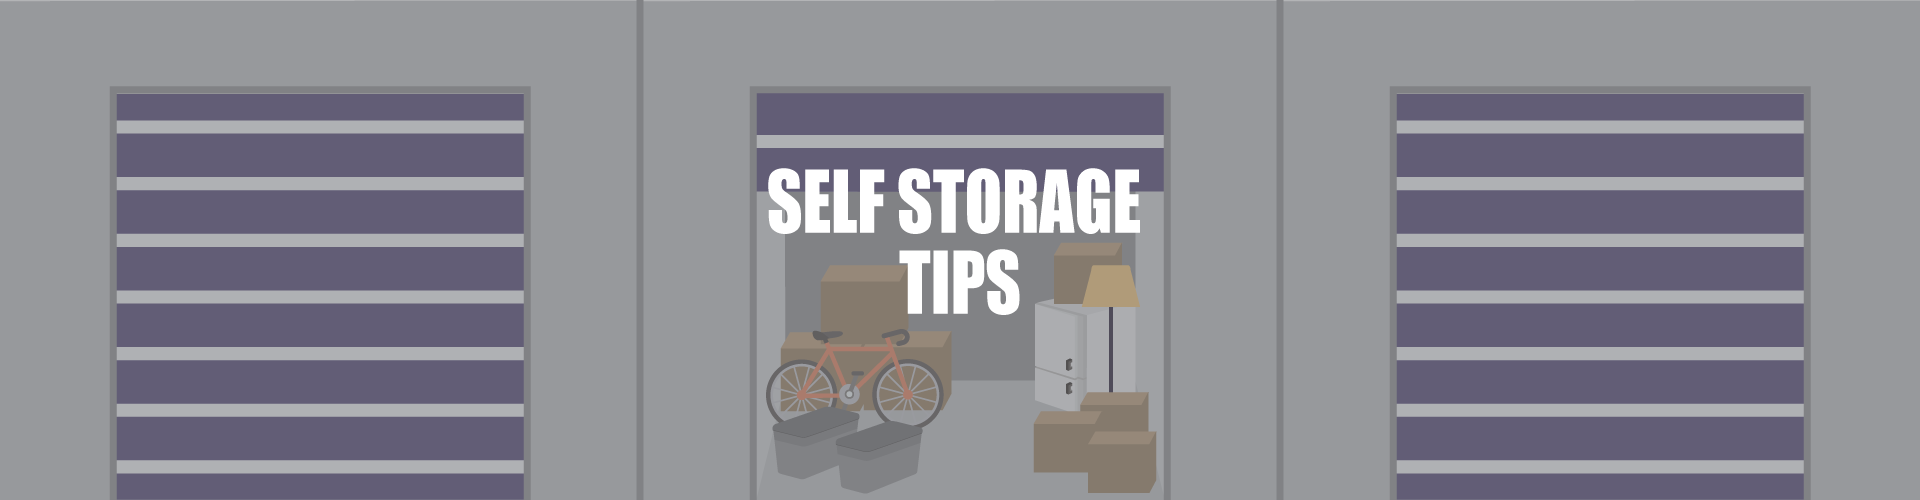 Self Storage Tips hero graphic